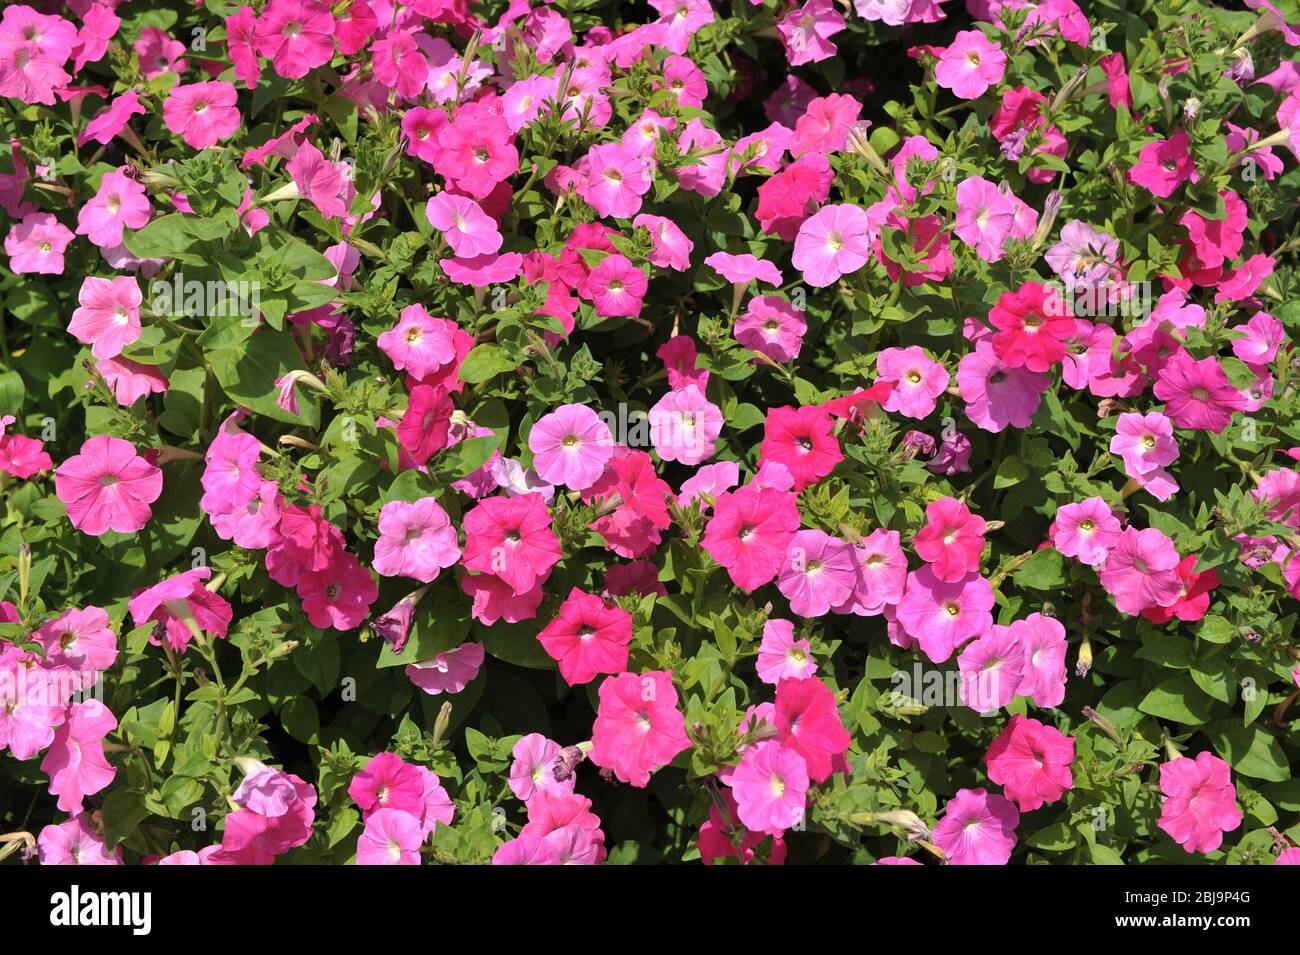 Aubertia Aubrieta rose violet et rouge petite plante vivace ornementale -  photo de stock Photo Stock - Alamy